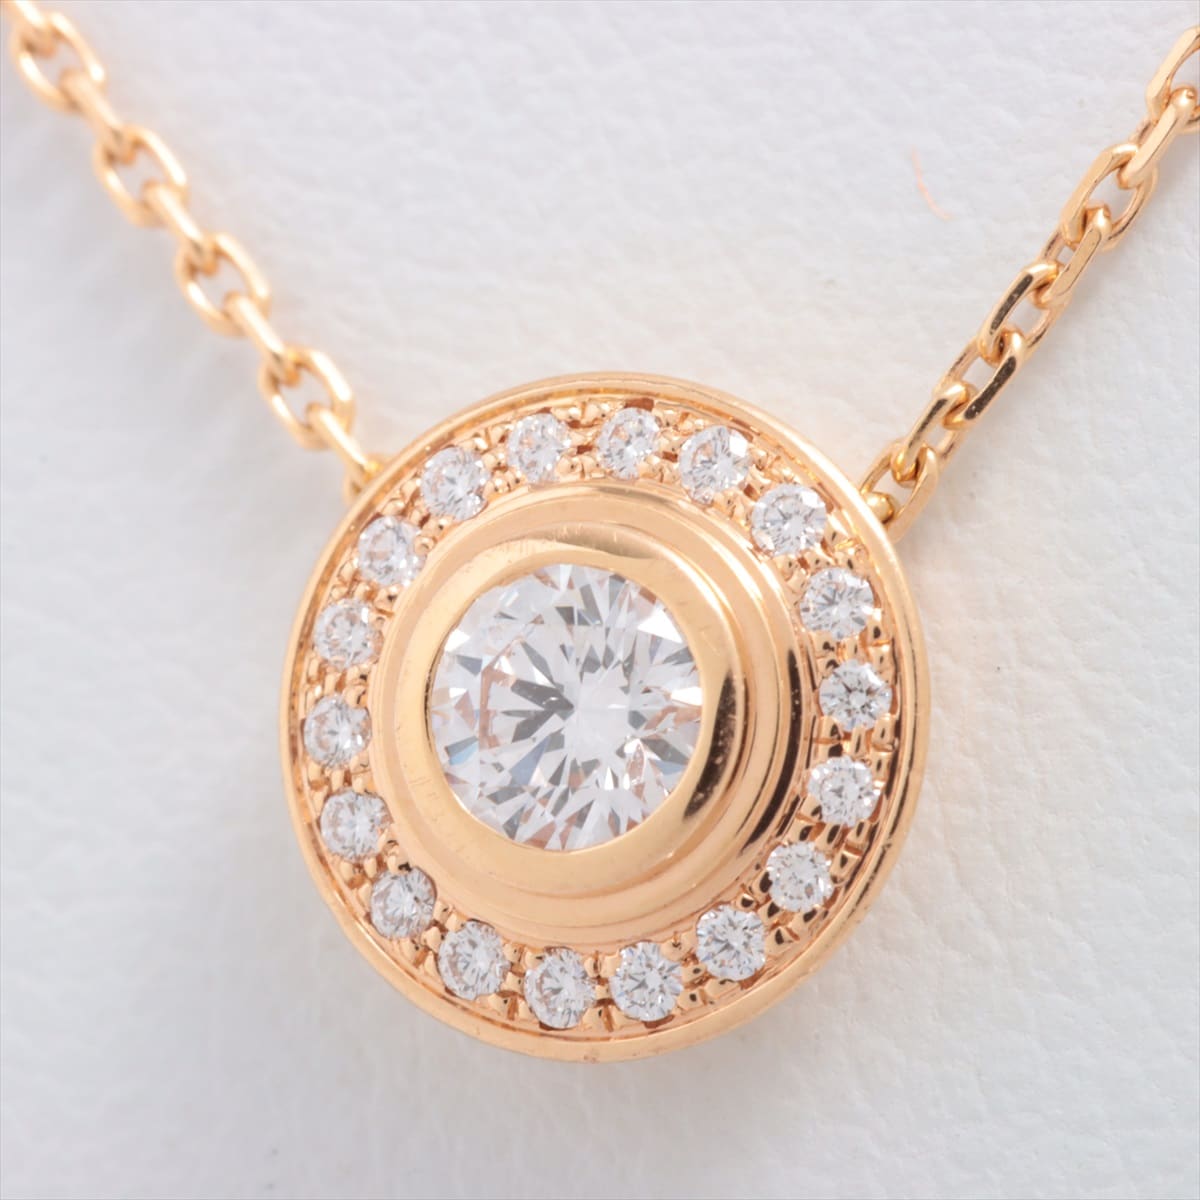 Cartier Damenuhr diamond Necklace 750 YG 3.6g